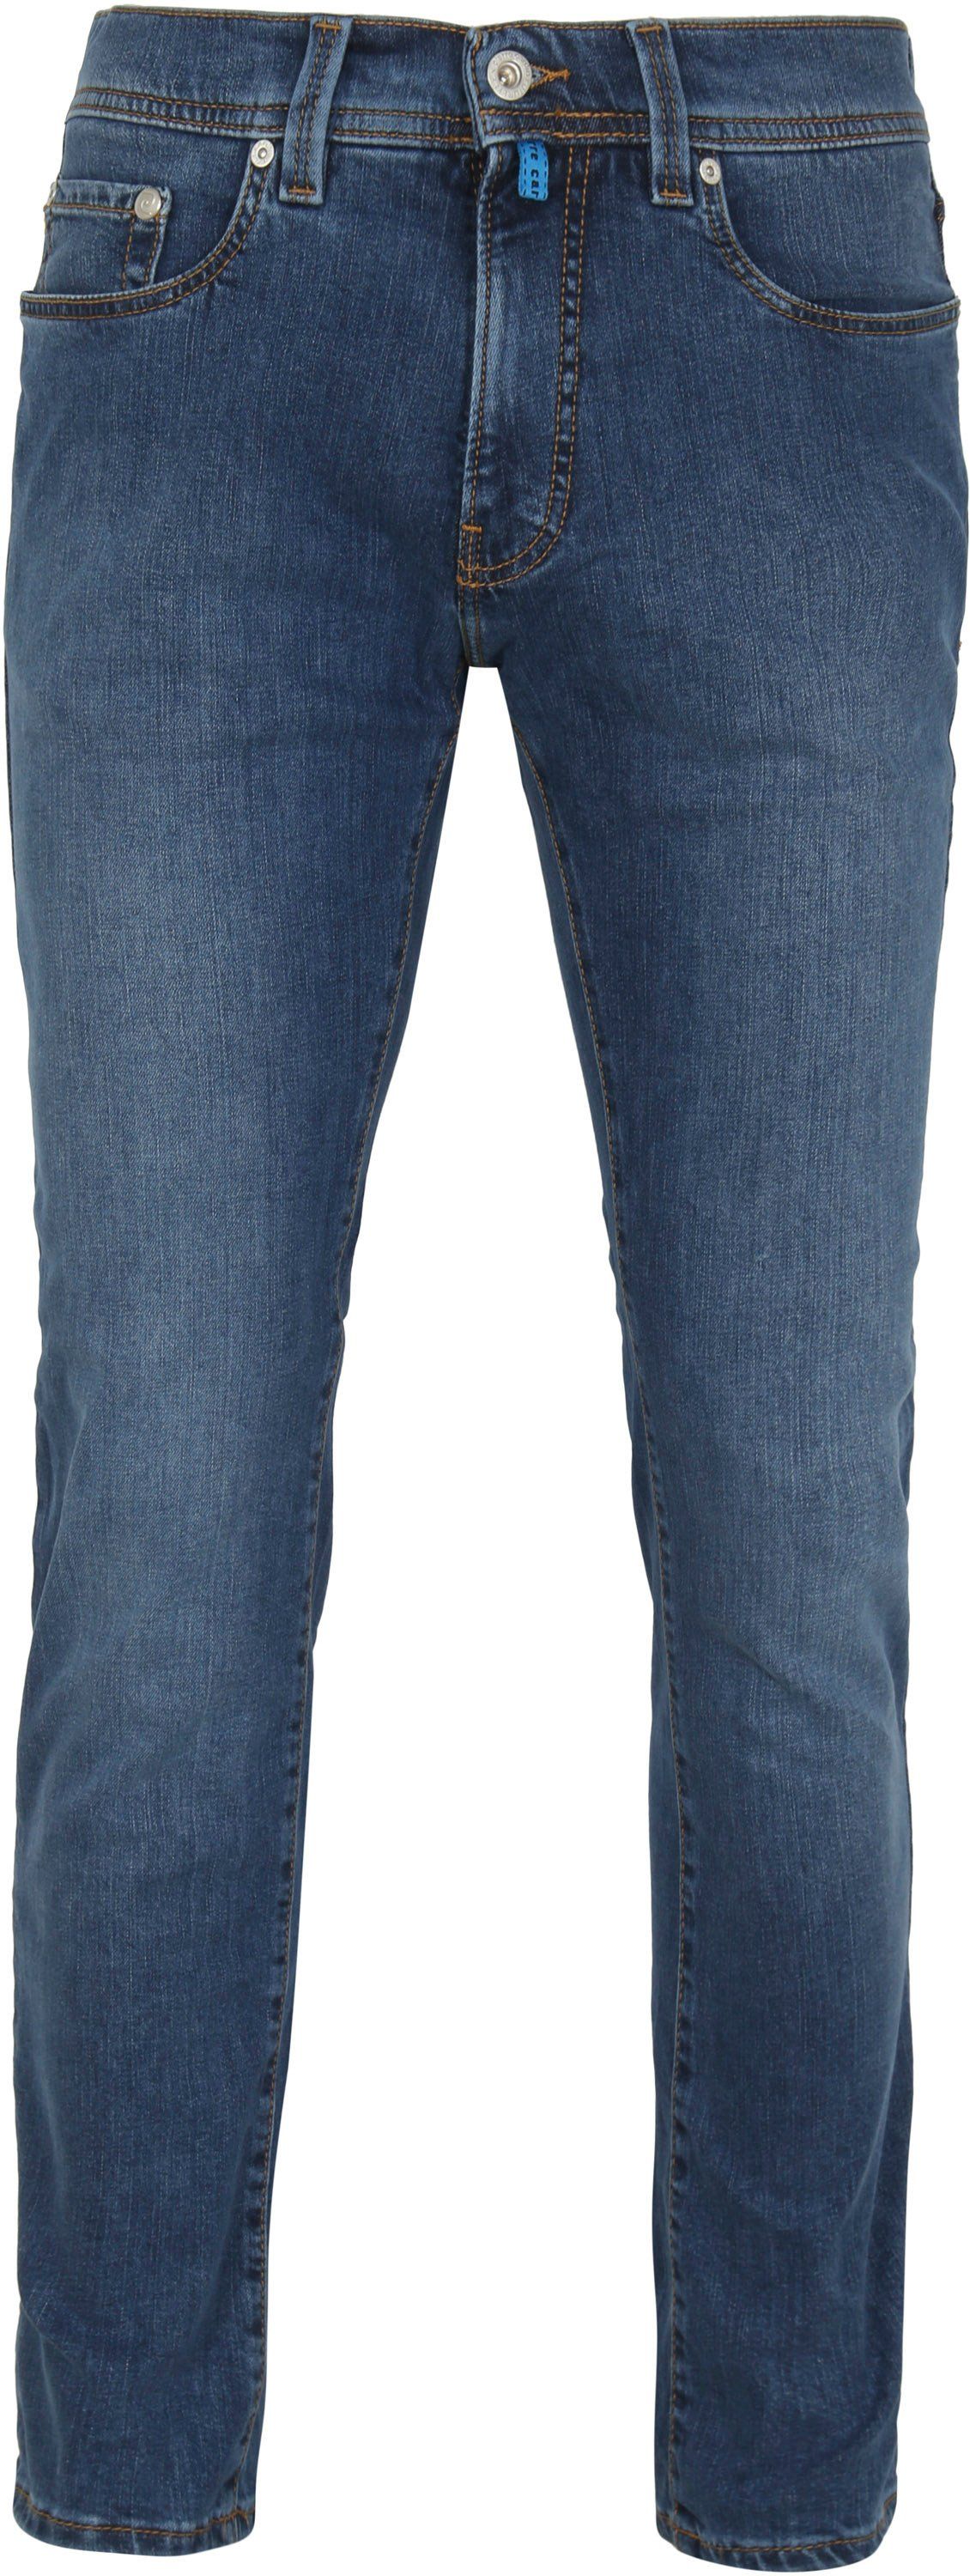 Pierre Cardin Jeans Lyon Tapered Future Flex Stonewash Blue size W 33